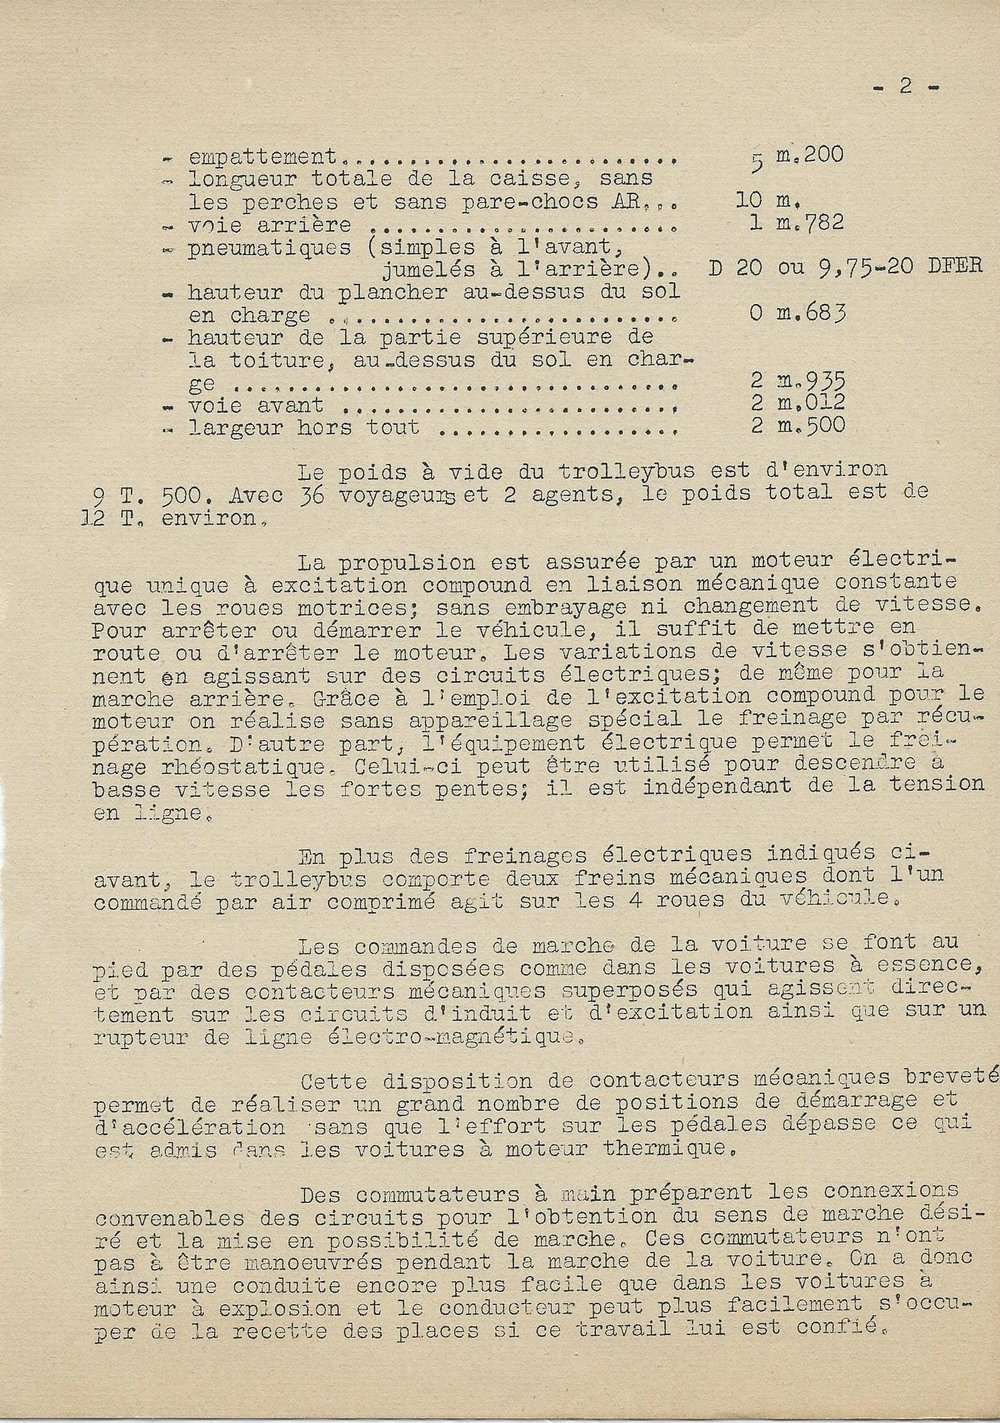  VRBh, série Aix-Marseille, str. 2 